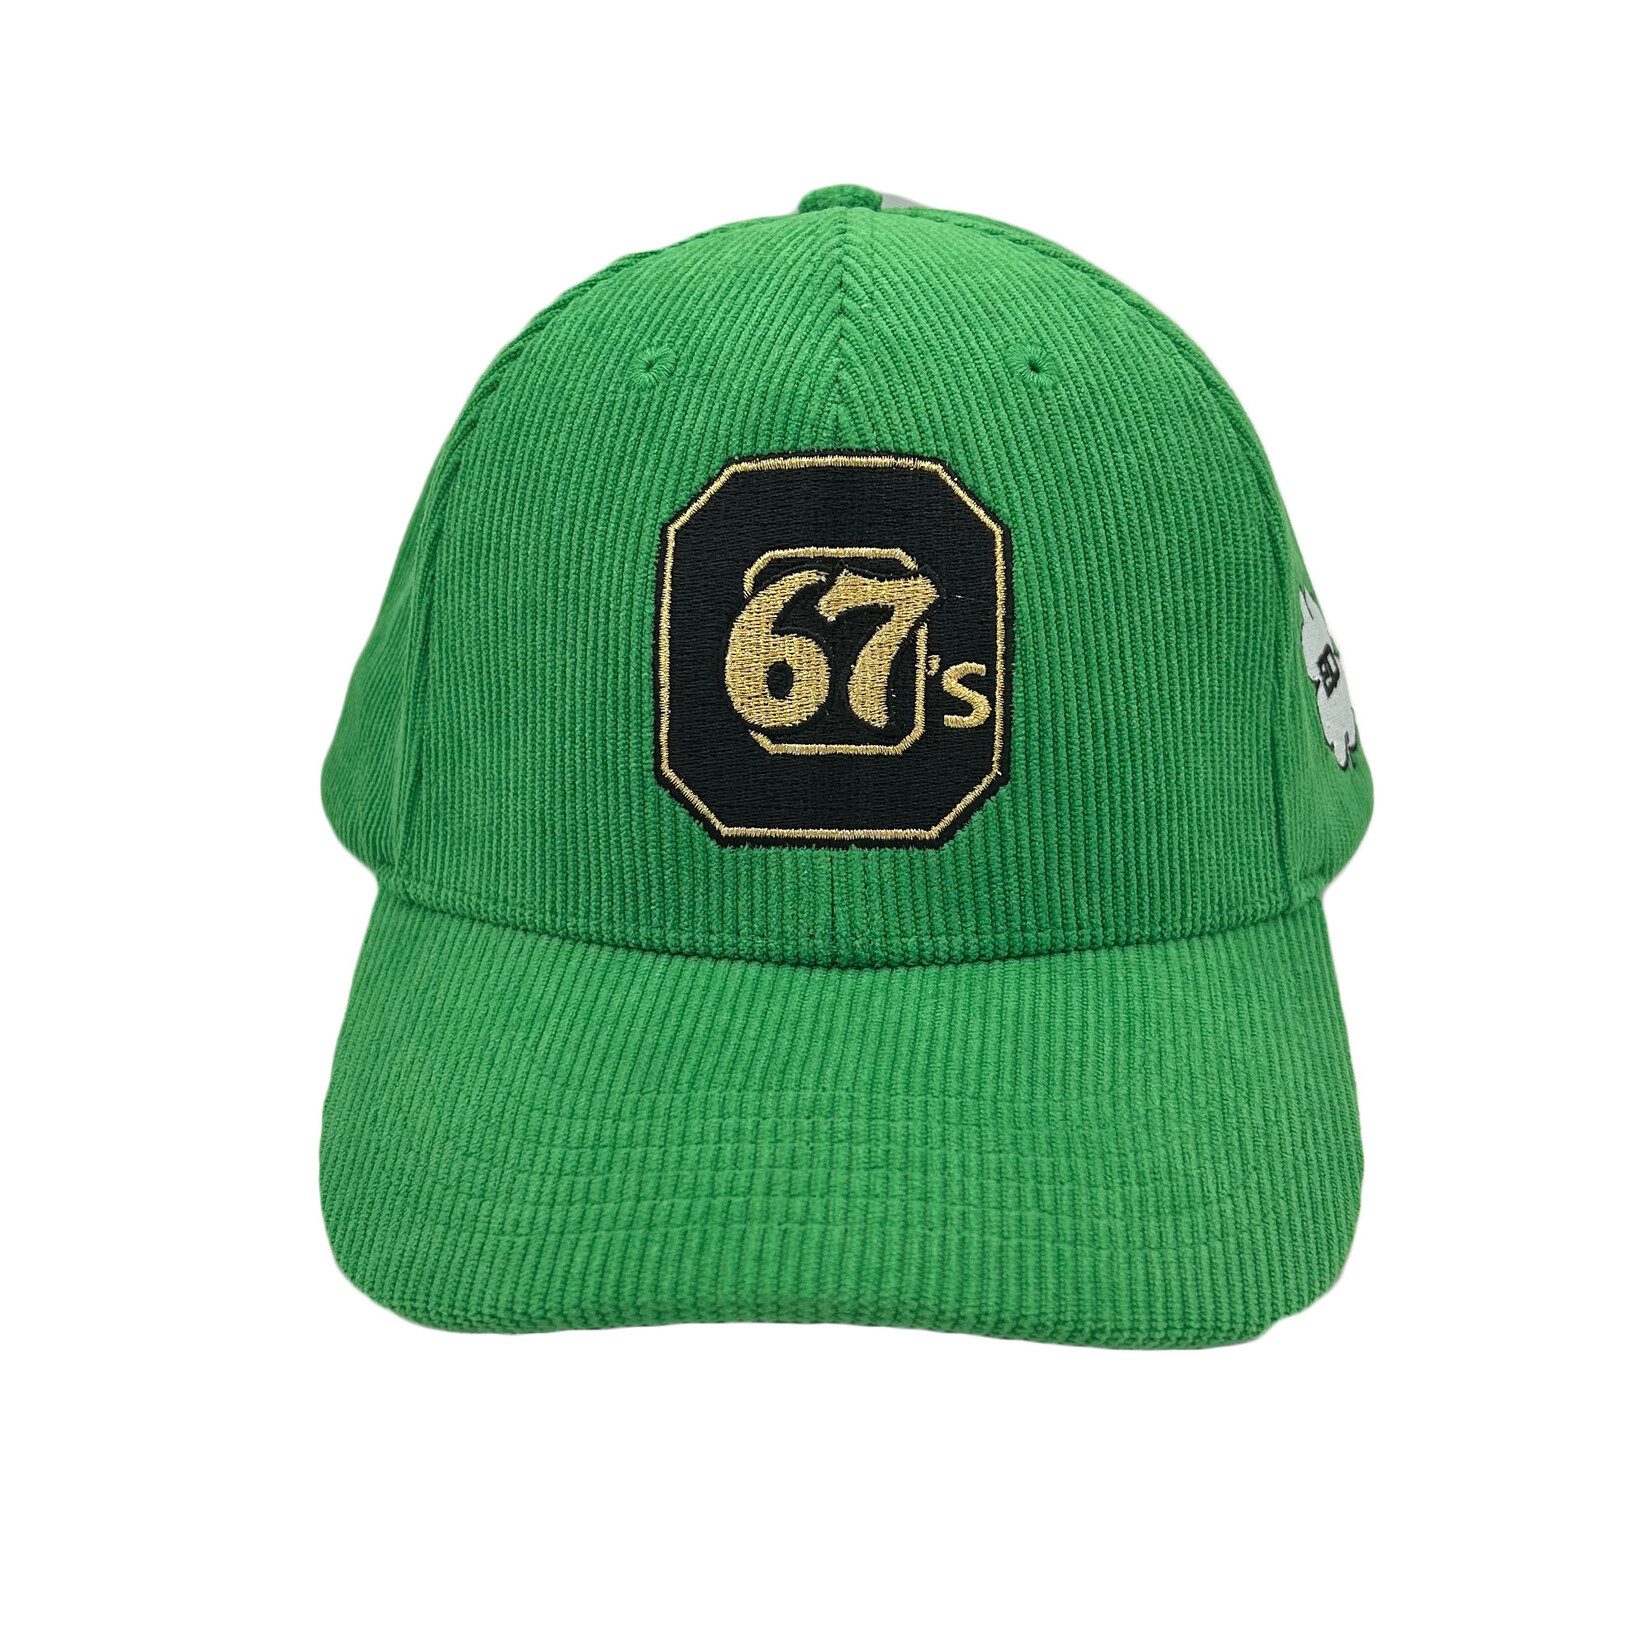 OTTAWA 67's 67's O'Riley Hat